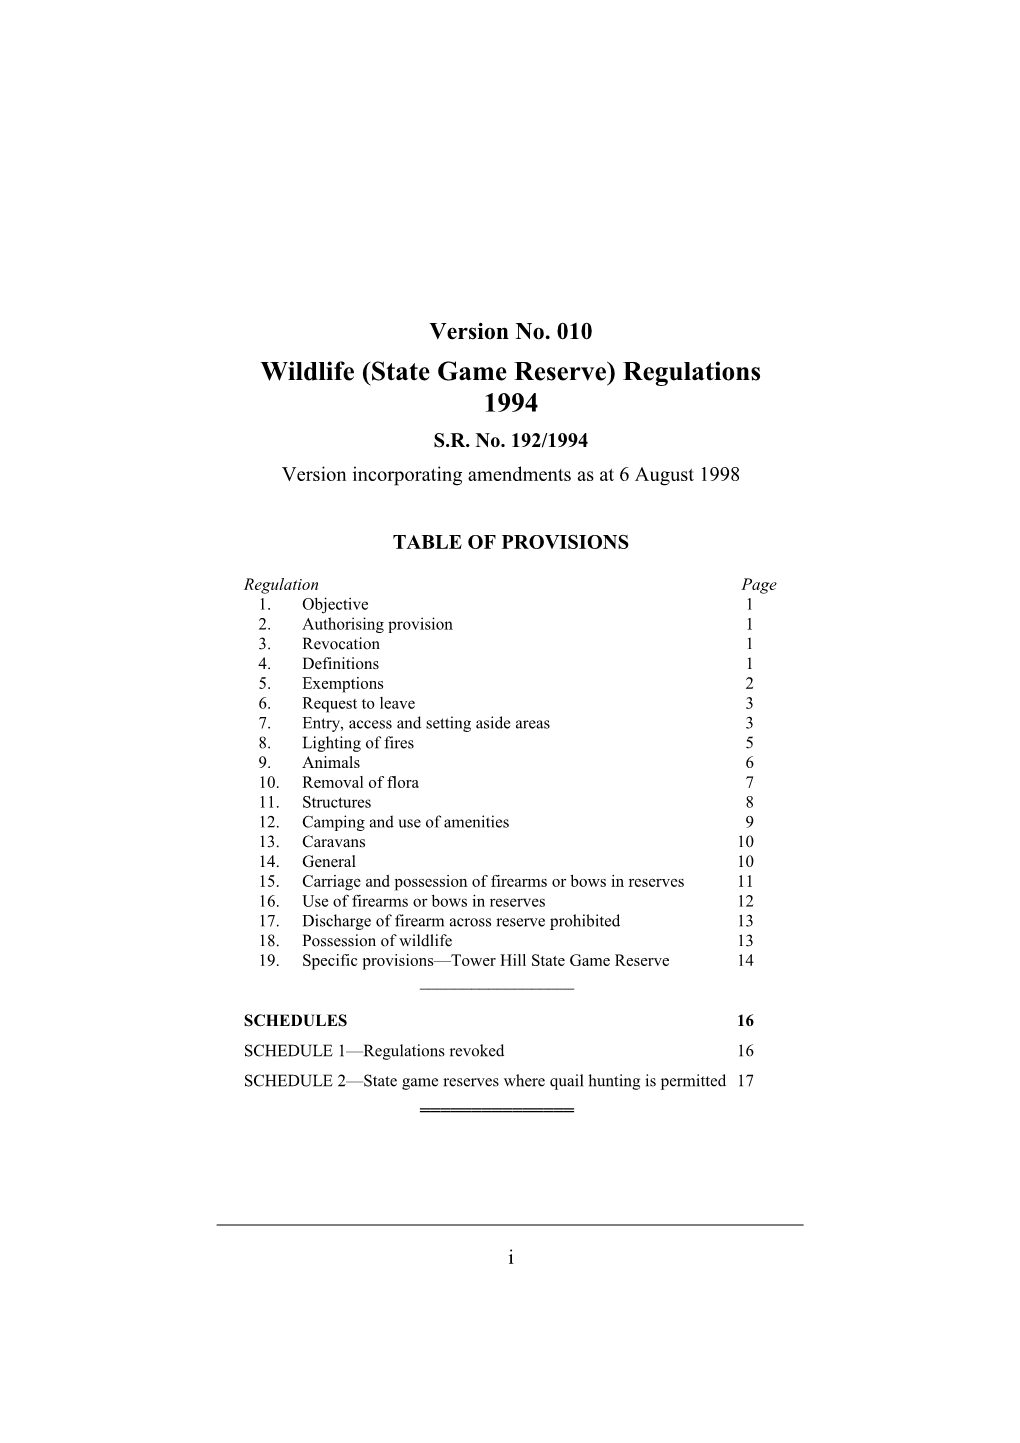 Wildlife (State Game Reserve) Regulations 1994